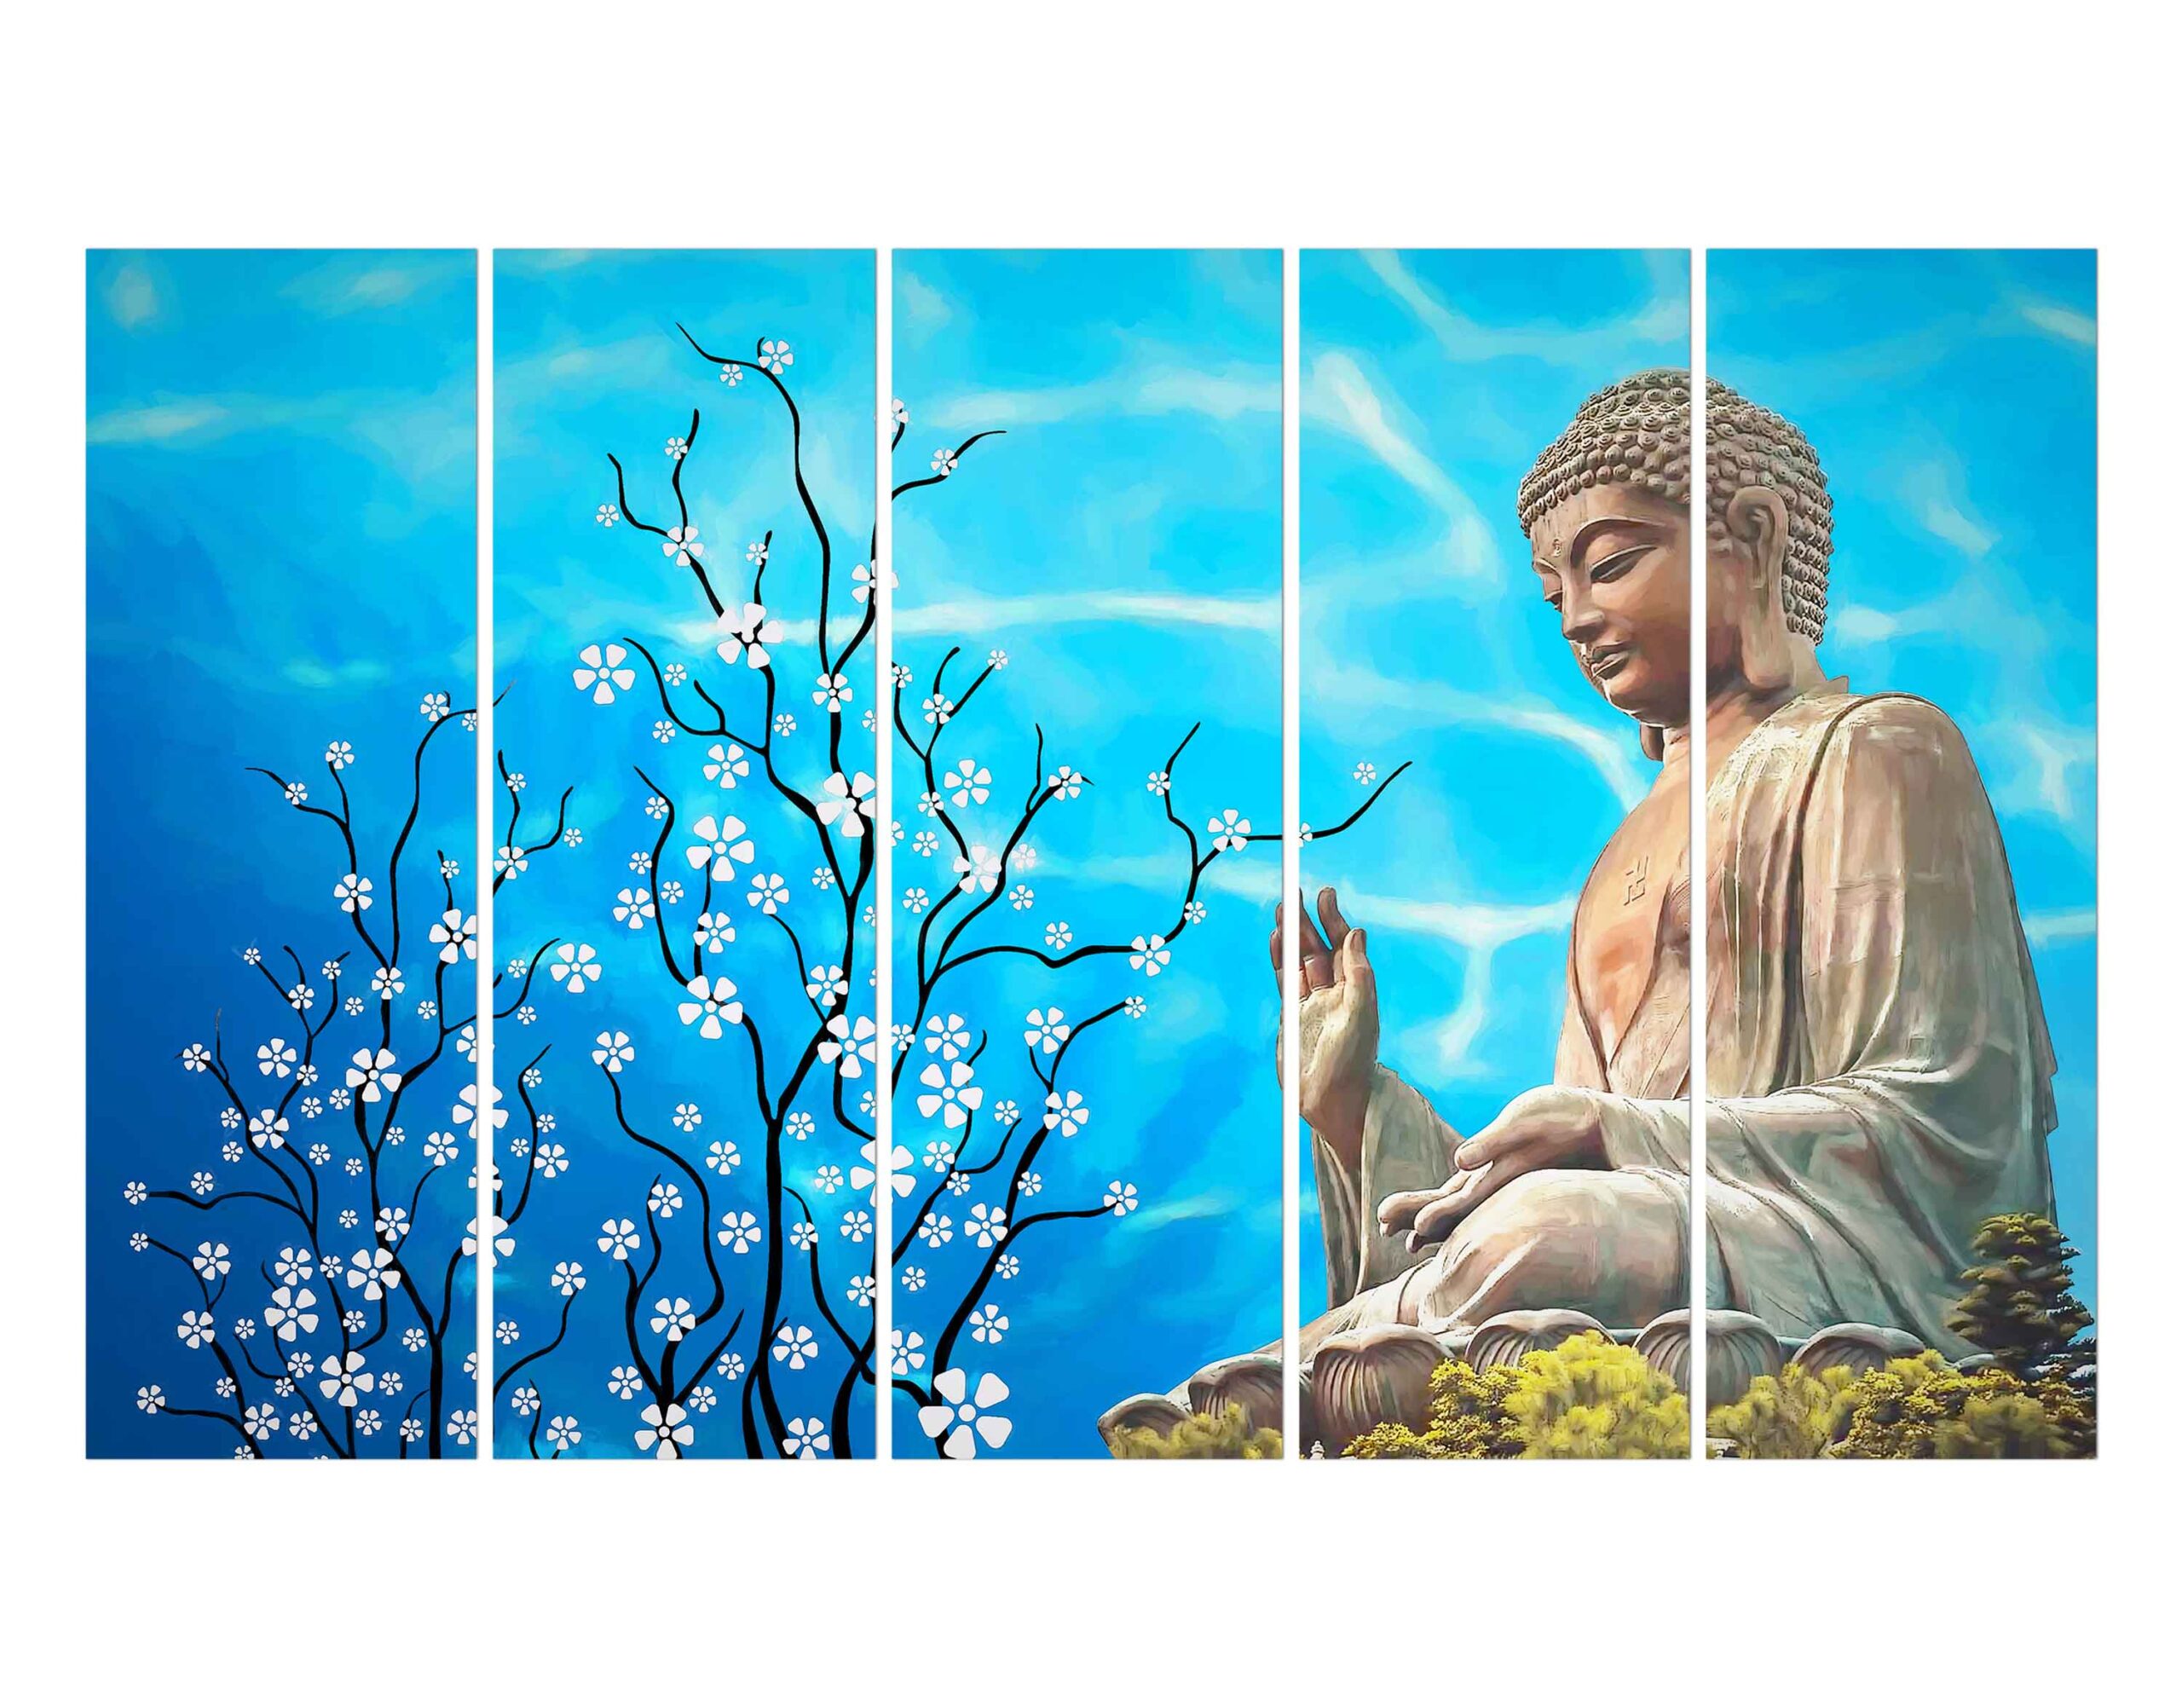 Big Tian Tan Buddha Shakyamuni Bronze Statue in Hong Kong with Painted Tree & Flowers on Blue Background Wall Art Painting